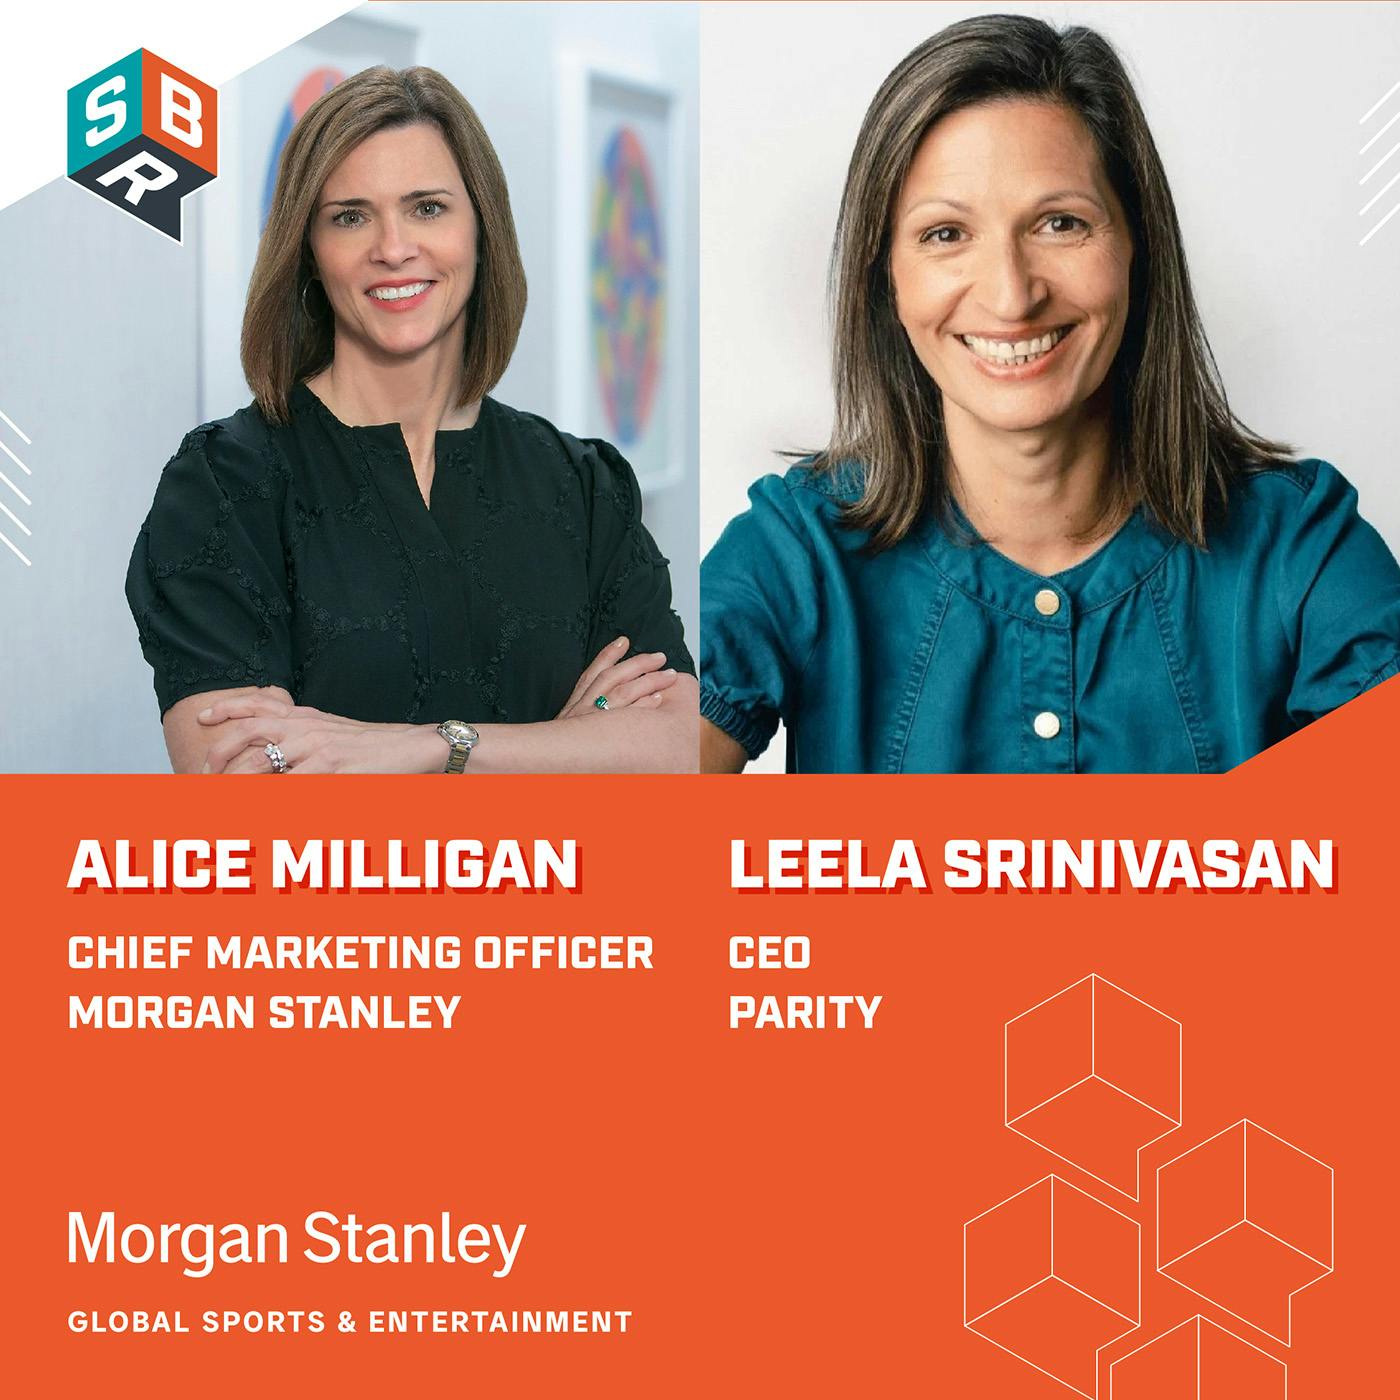 Alice Milligan - Chief Marketing Officer - Morgan Stanley